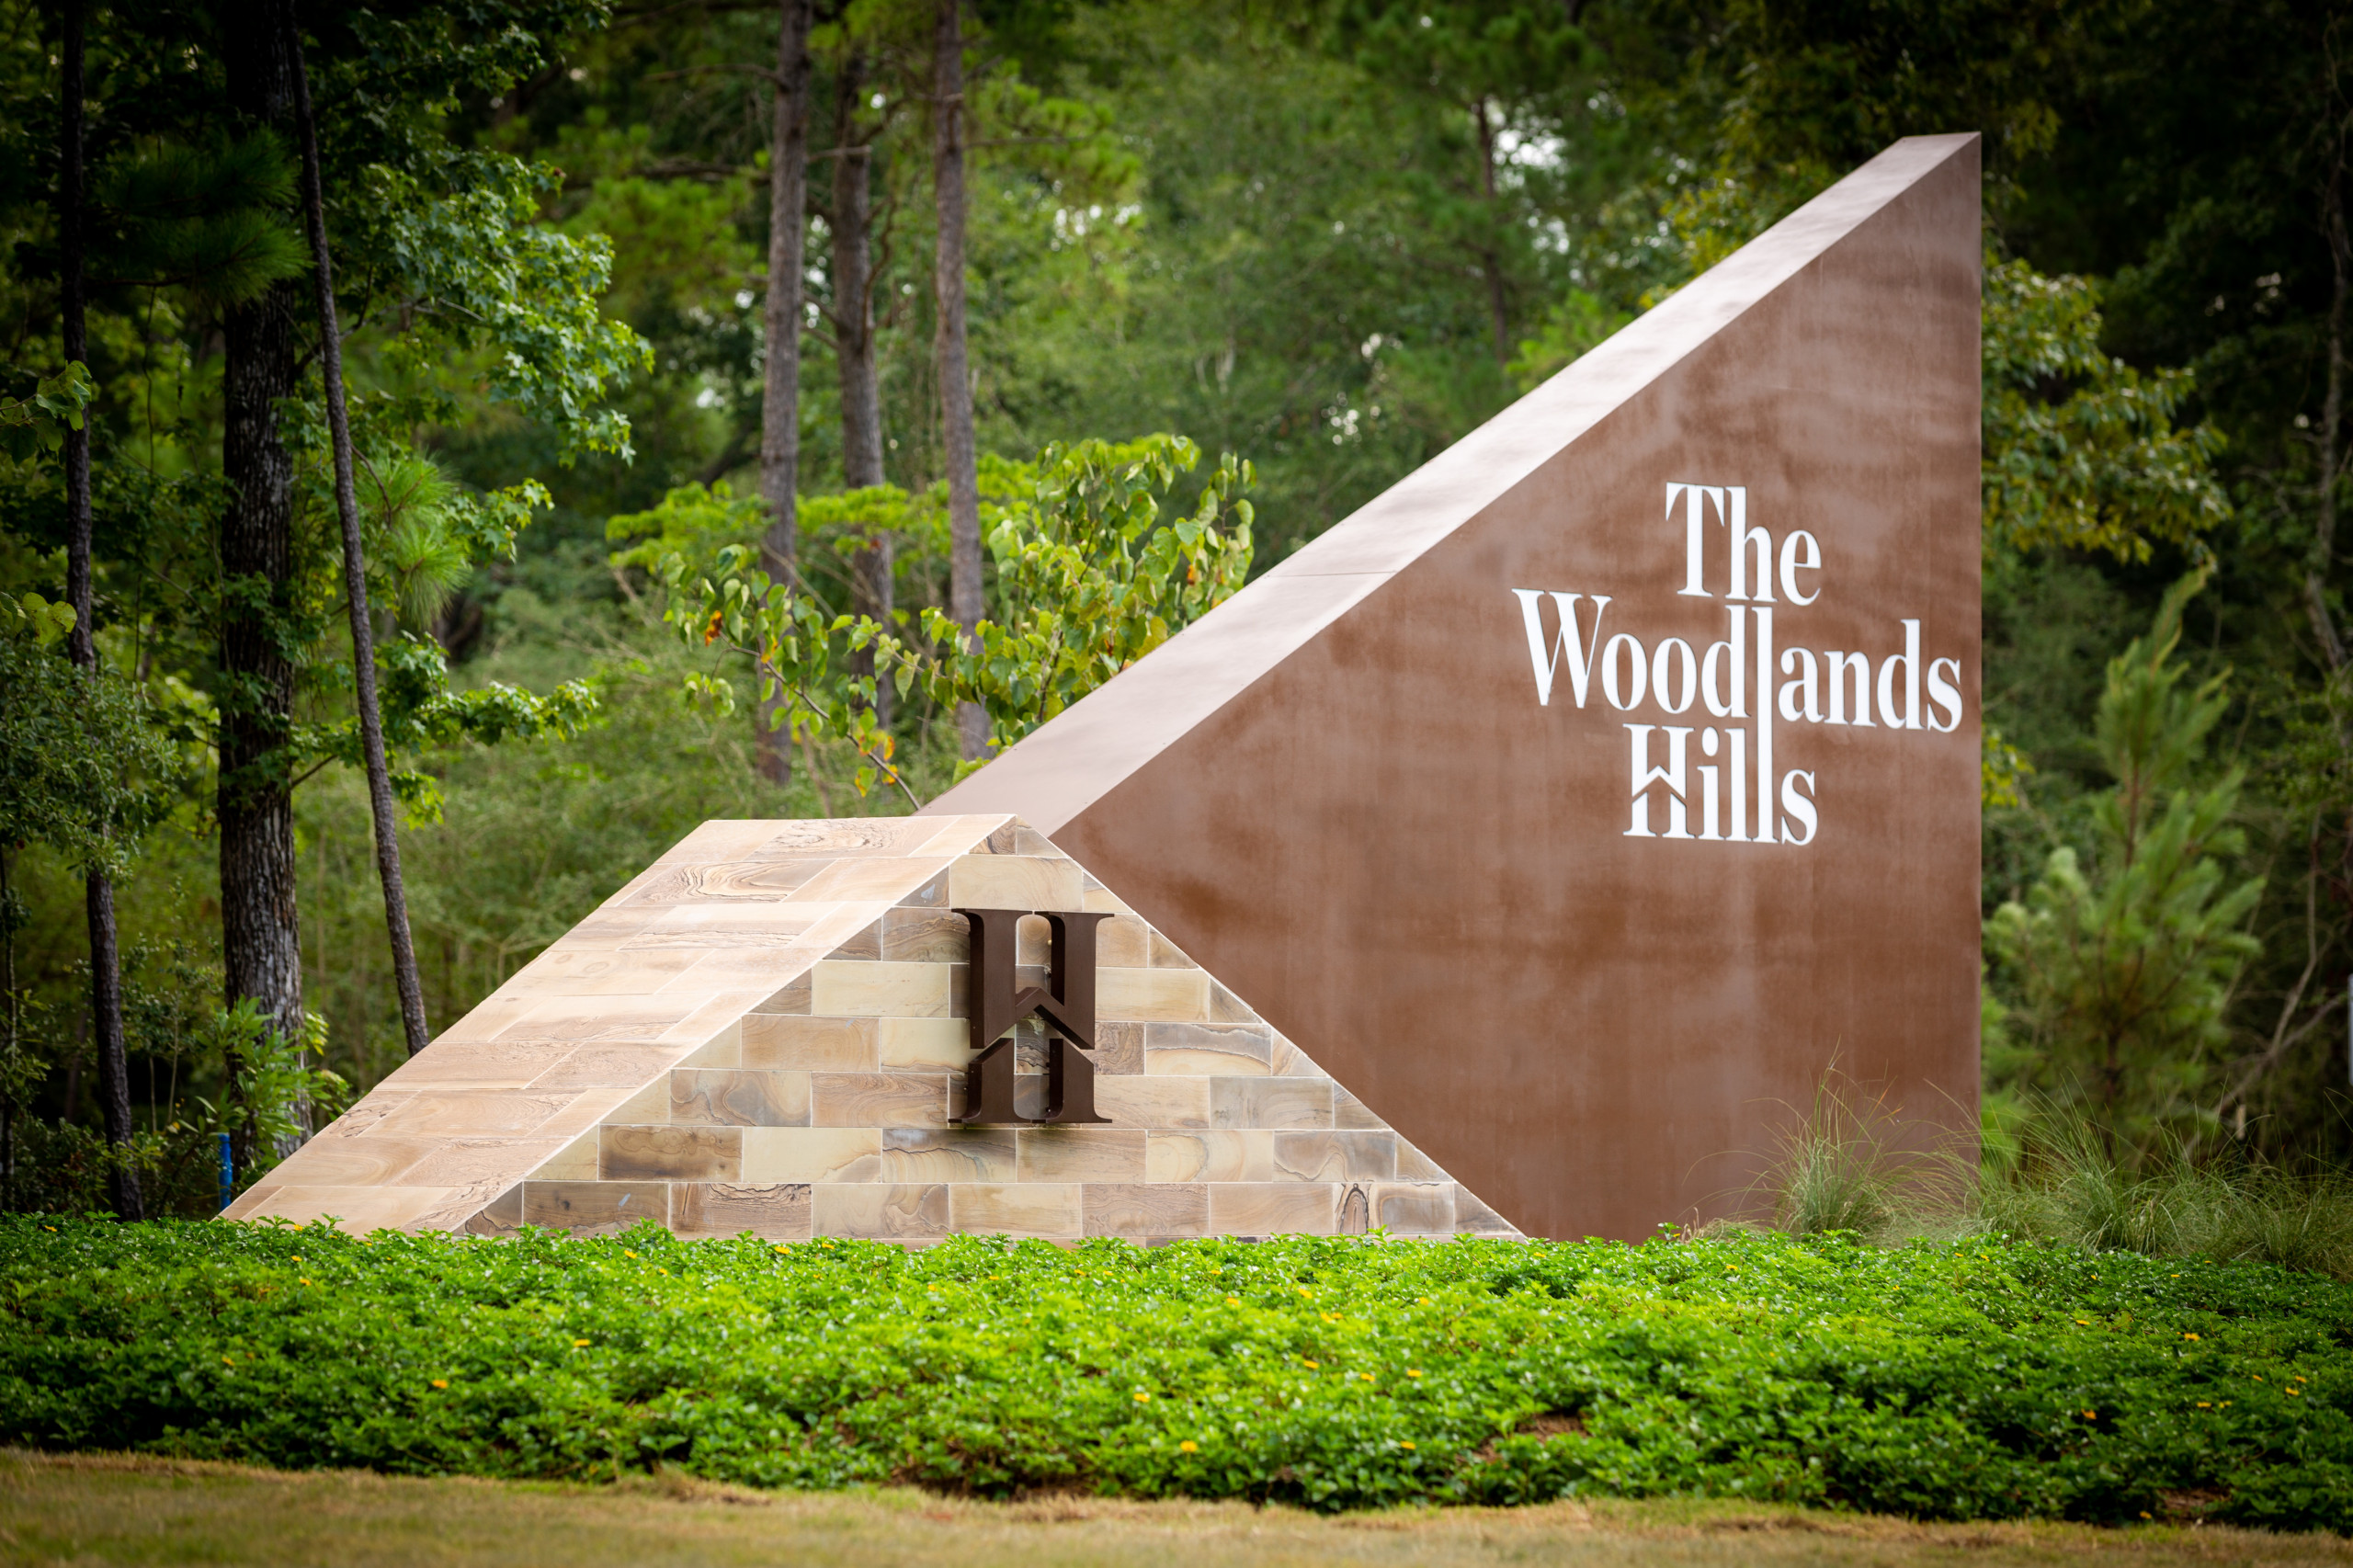 Woodlands Hills Neighborhood sign